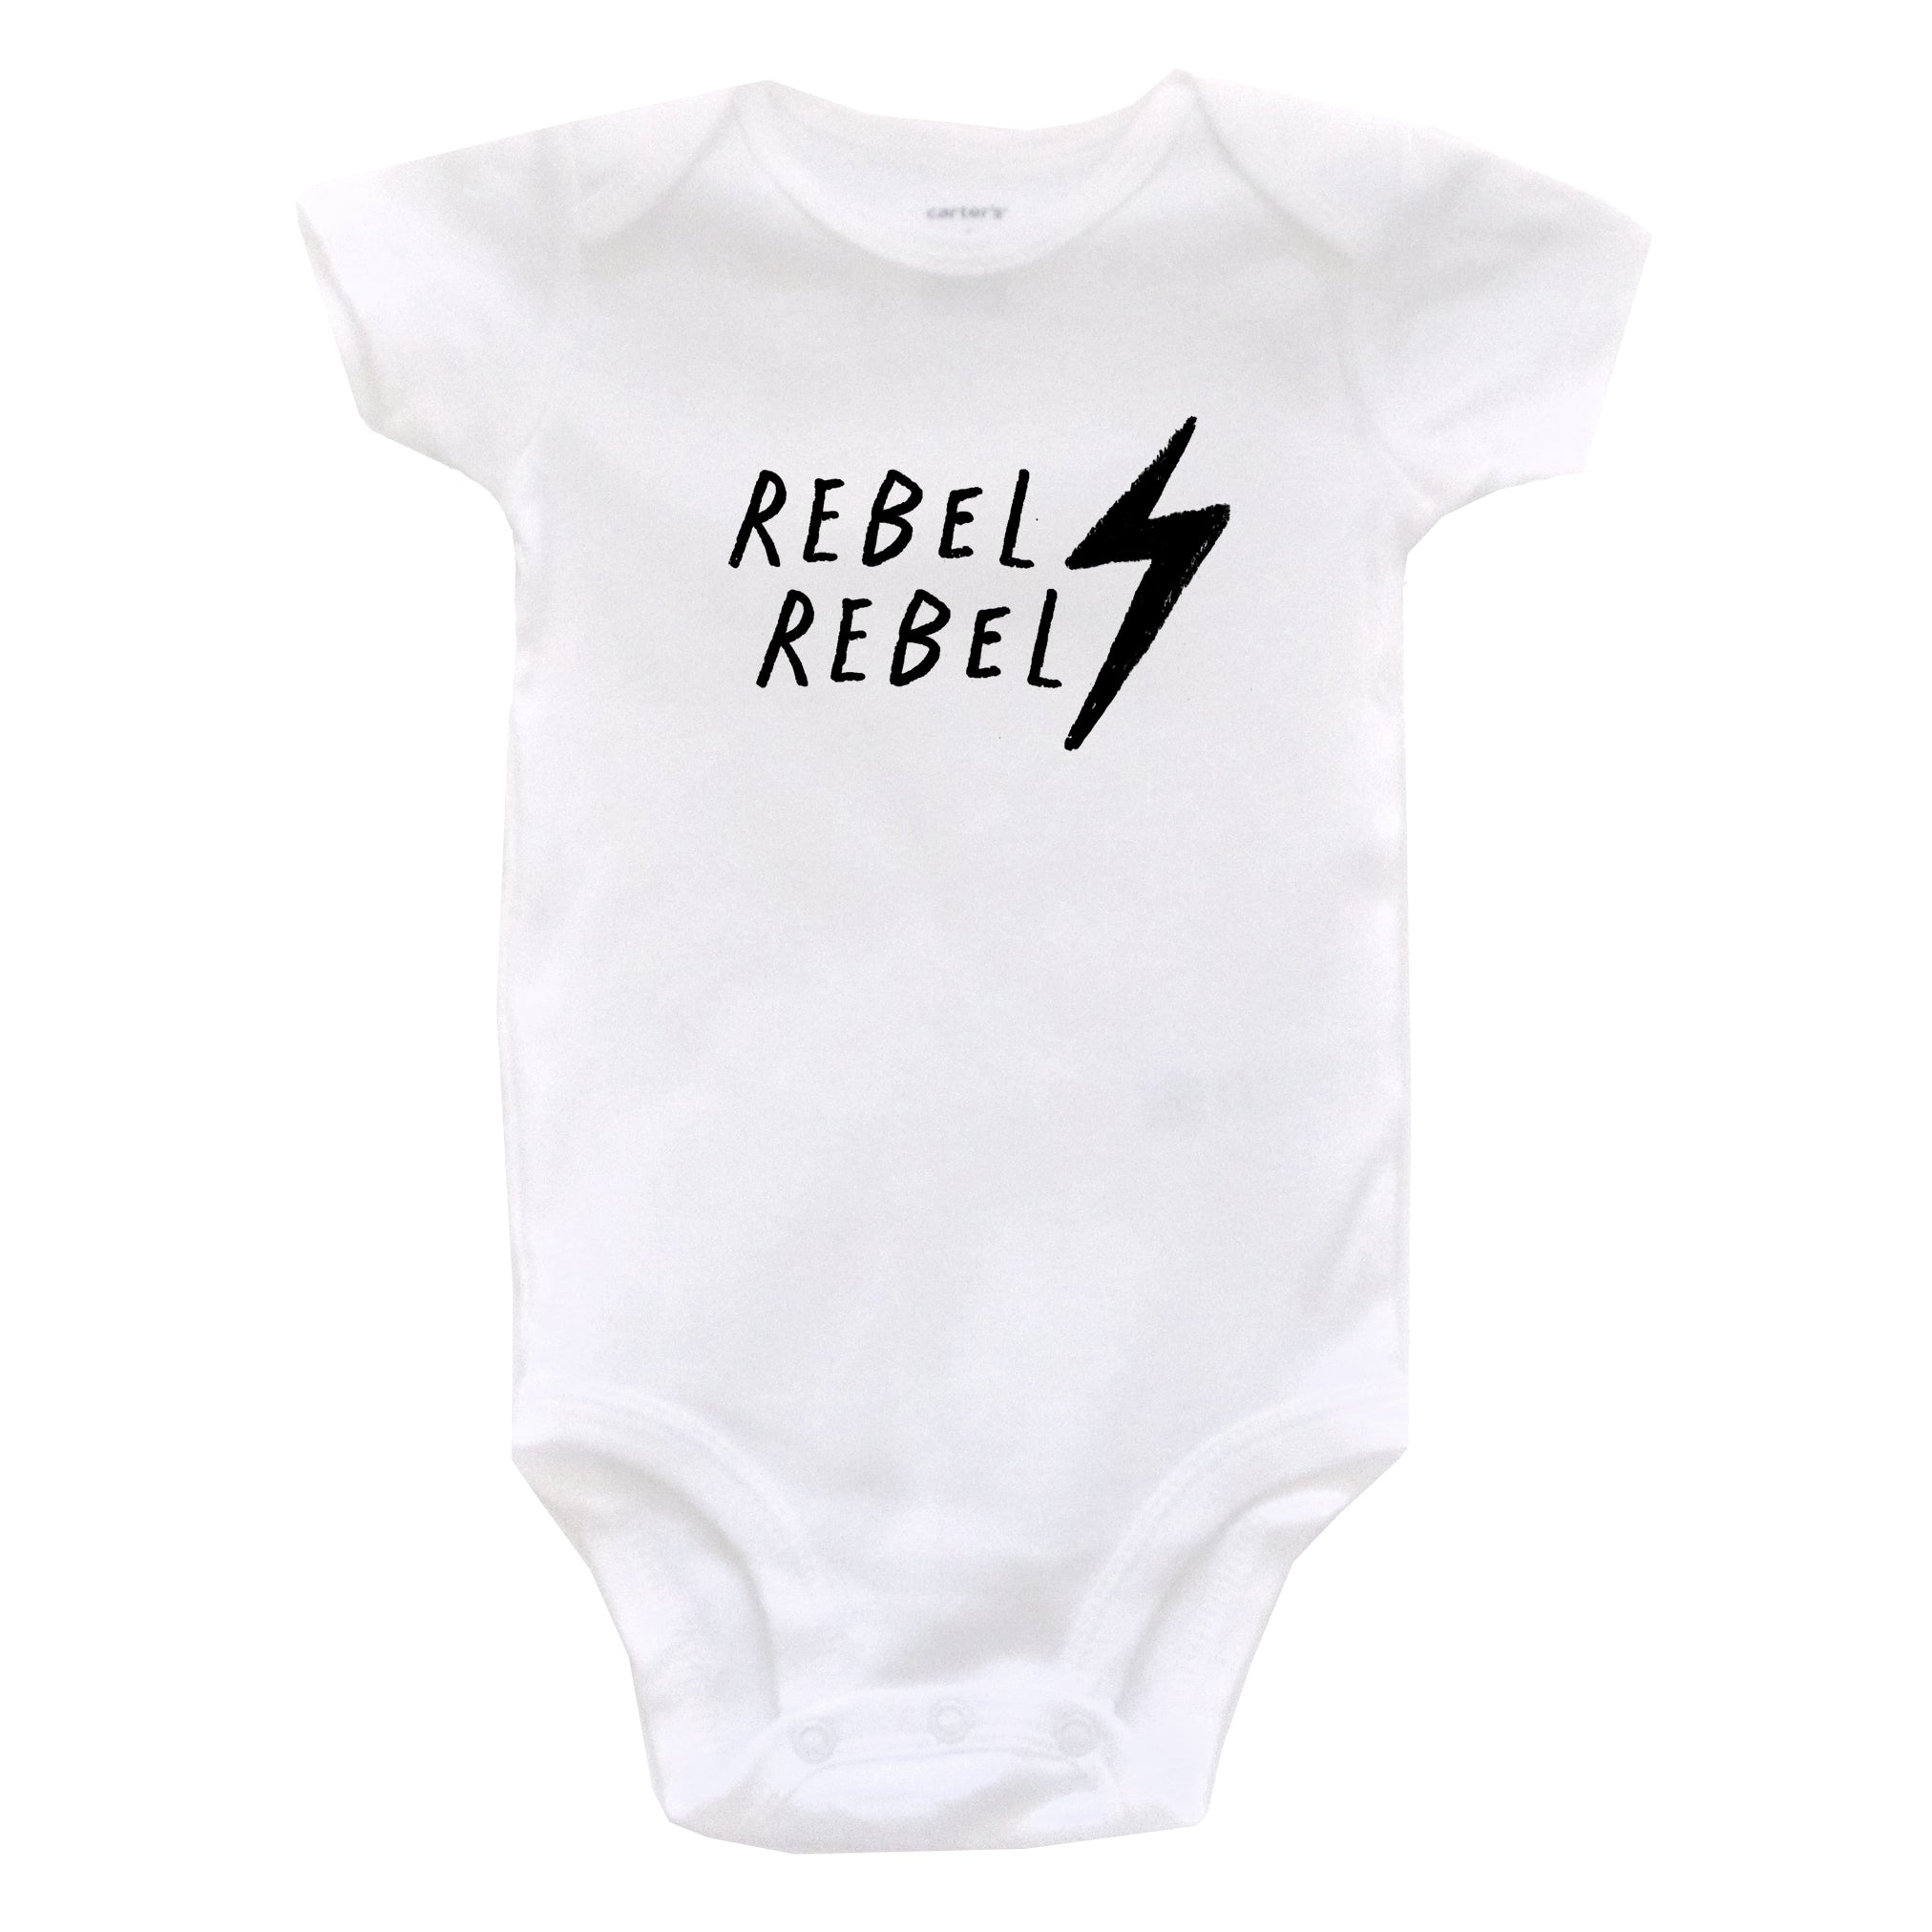 Rebel Rebel : bodysuit